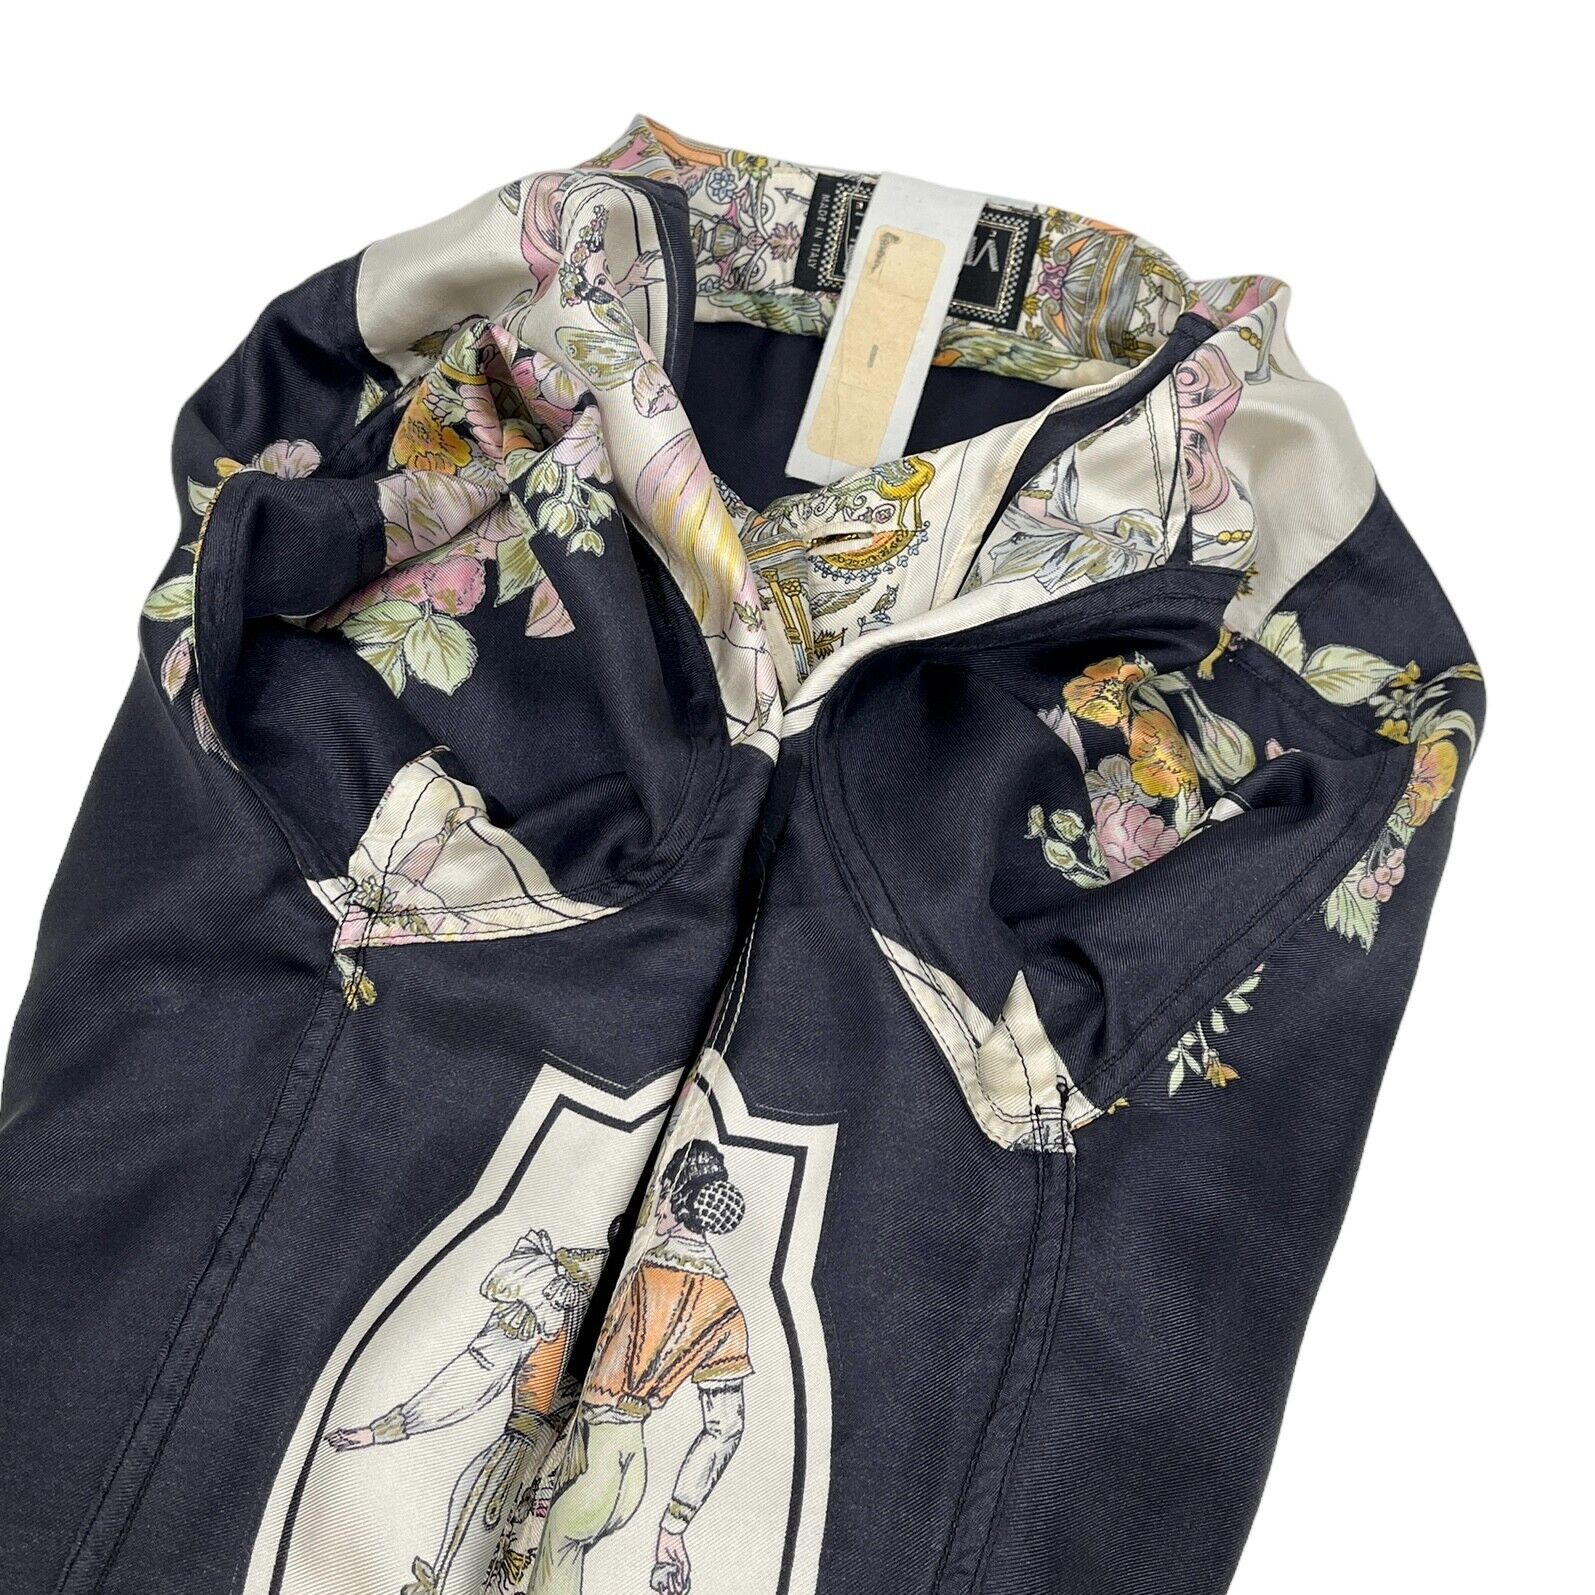 GIANNI VERSACE Vintage Silk Shirt Top #40 Pocket Gold Button Multicolor Rank AB